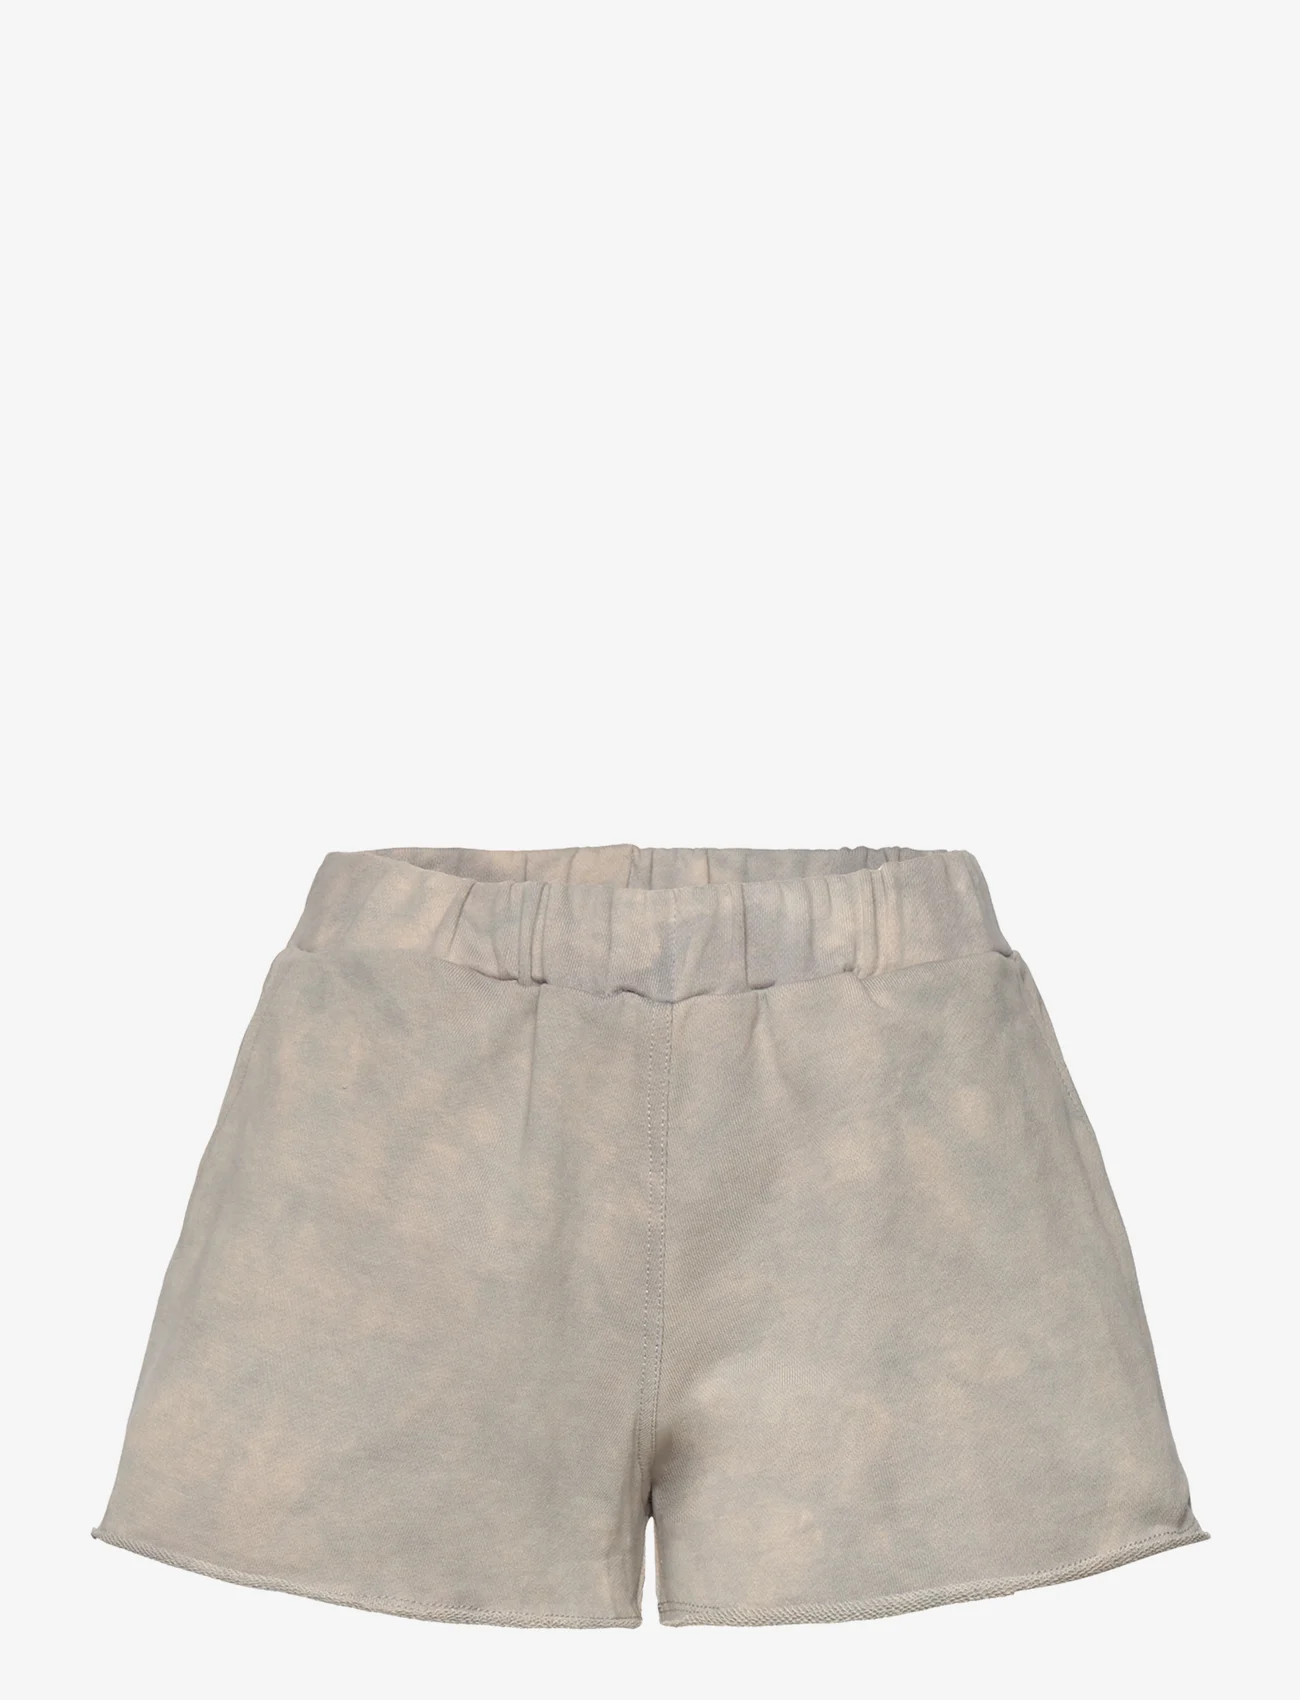 Rabens Saloner - Haraldine - casual shorts - flint grey - 0